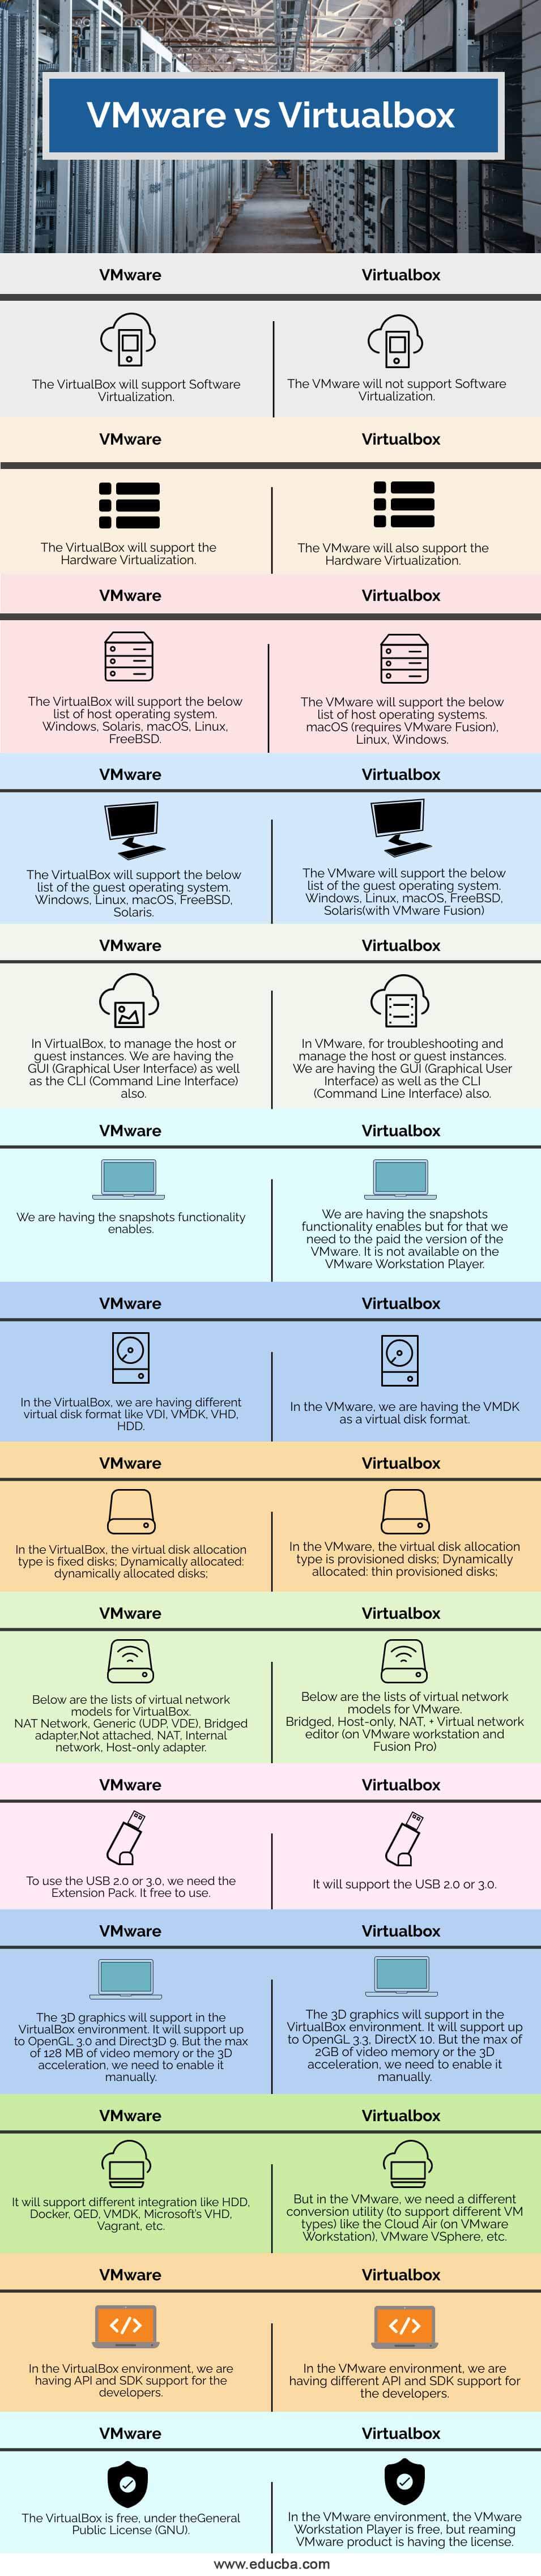 virtualbox vs vmware workstation 11